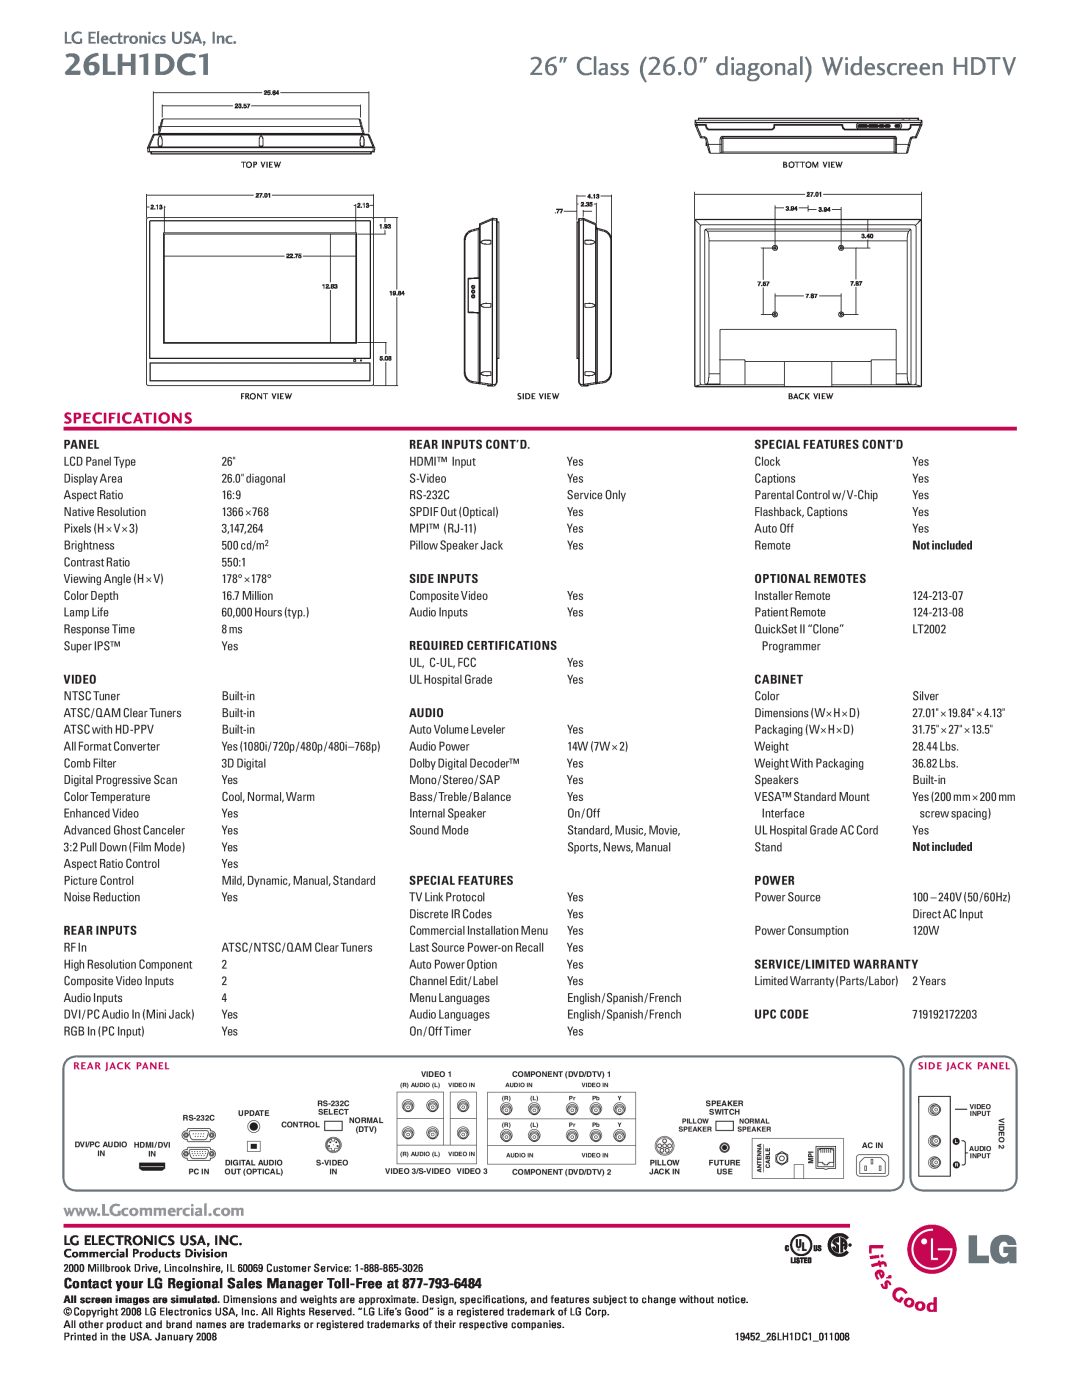 LG Electronics 26LH1DC1 warranty Class 26.0 diagonal Widescreen HDTV, LG Electronics USA, Inc, Specifications 